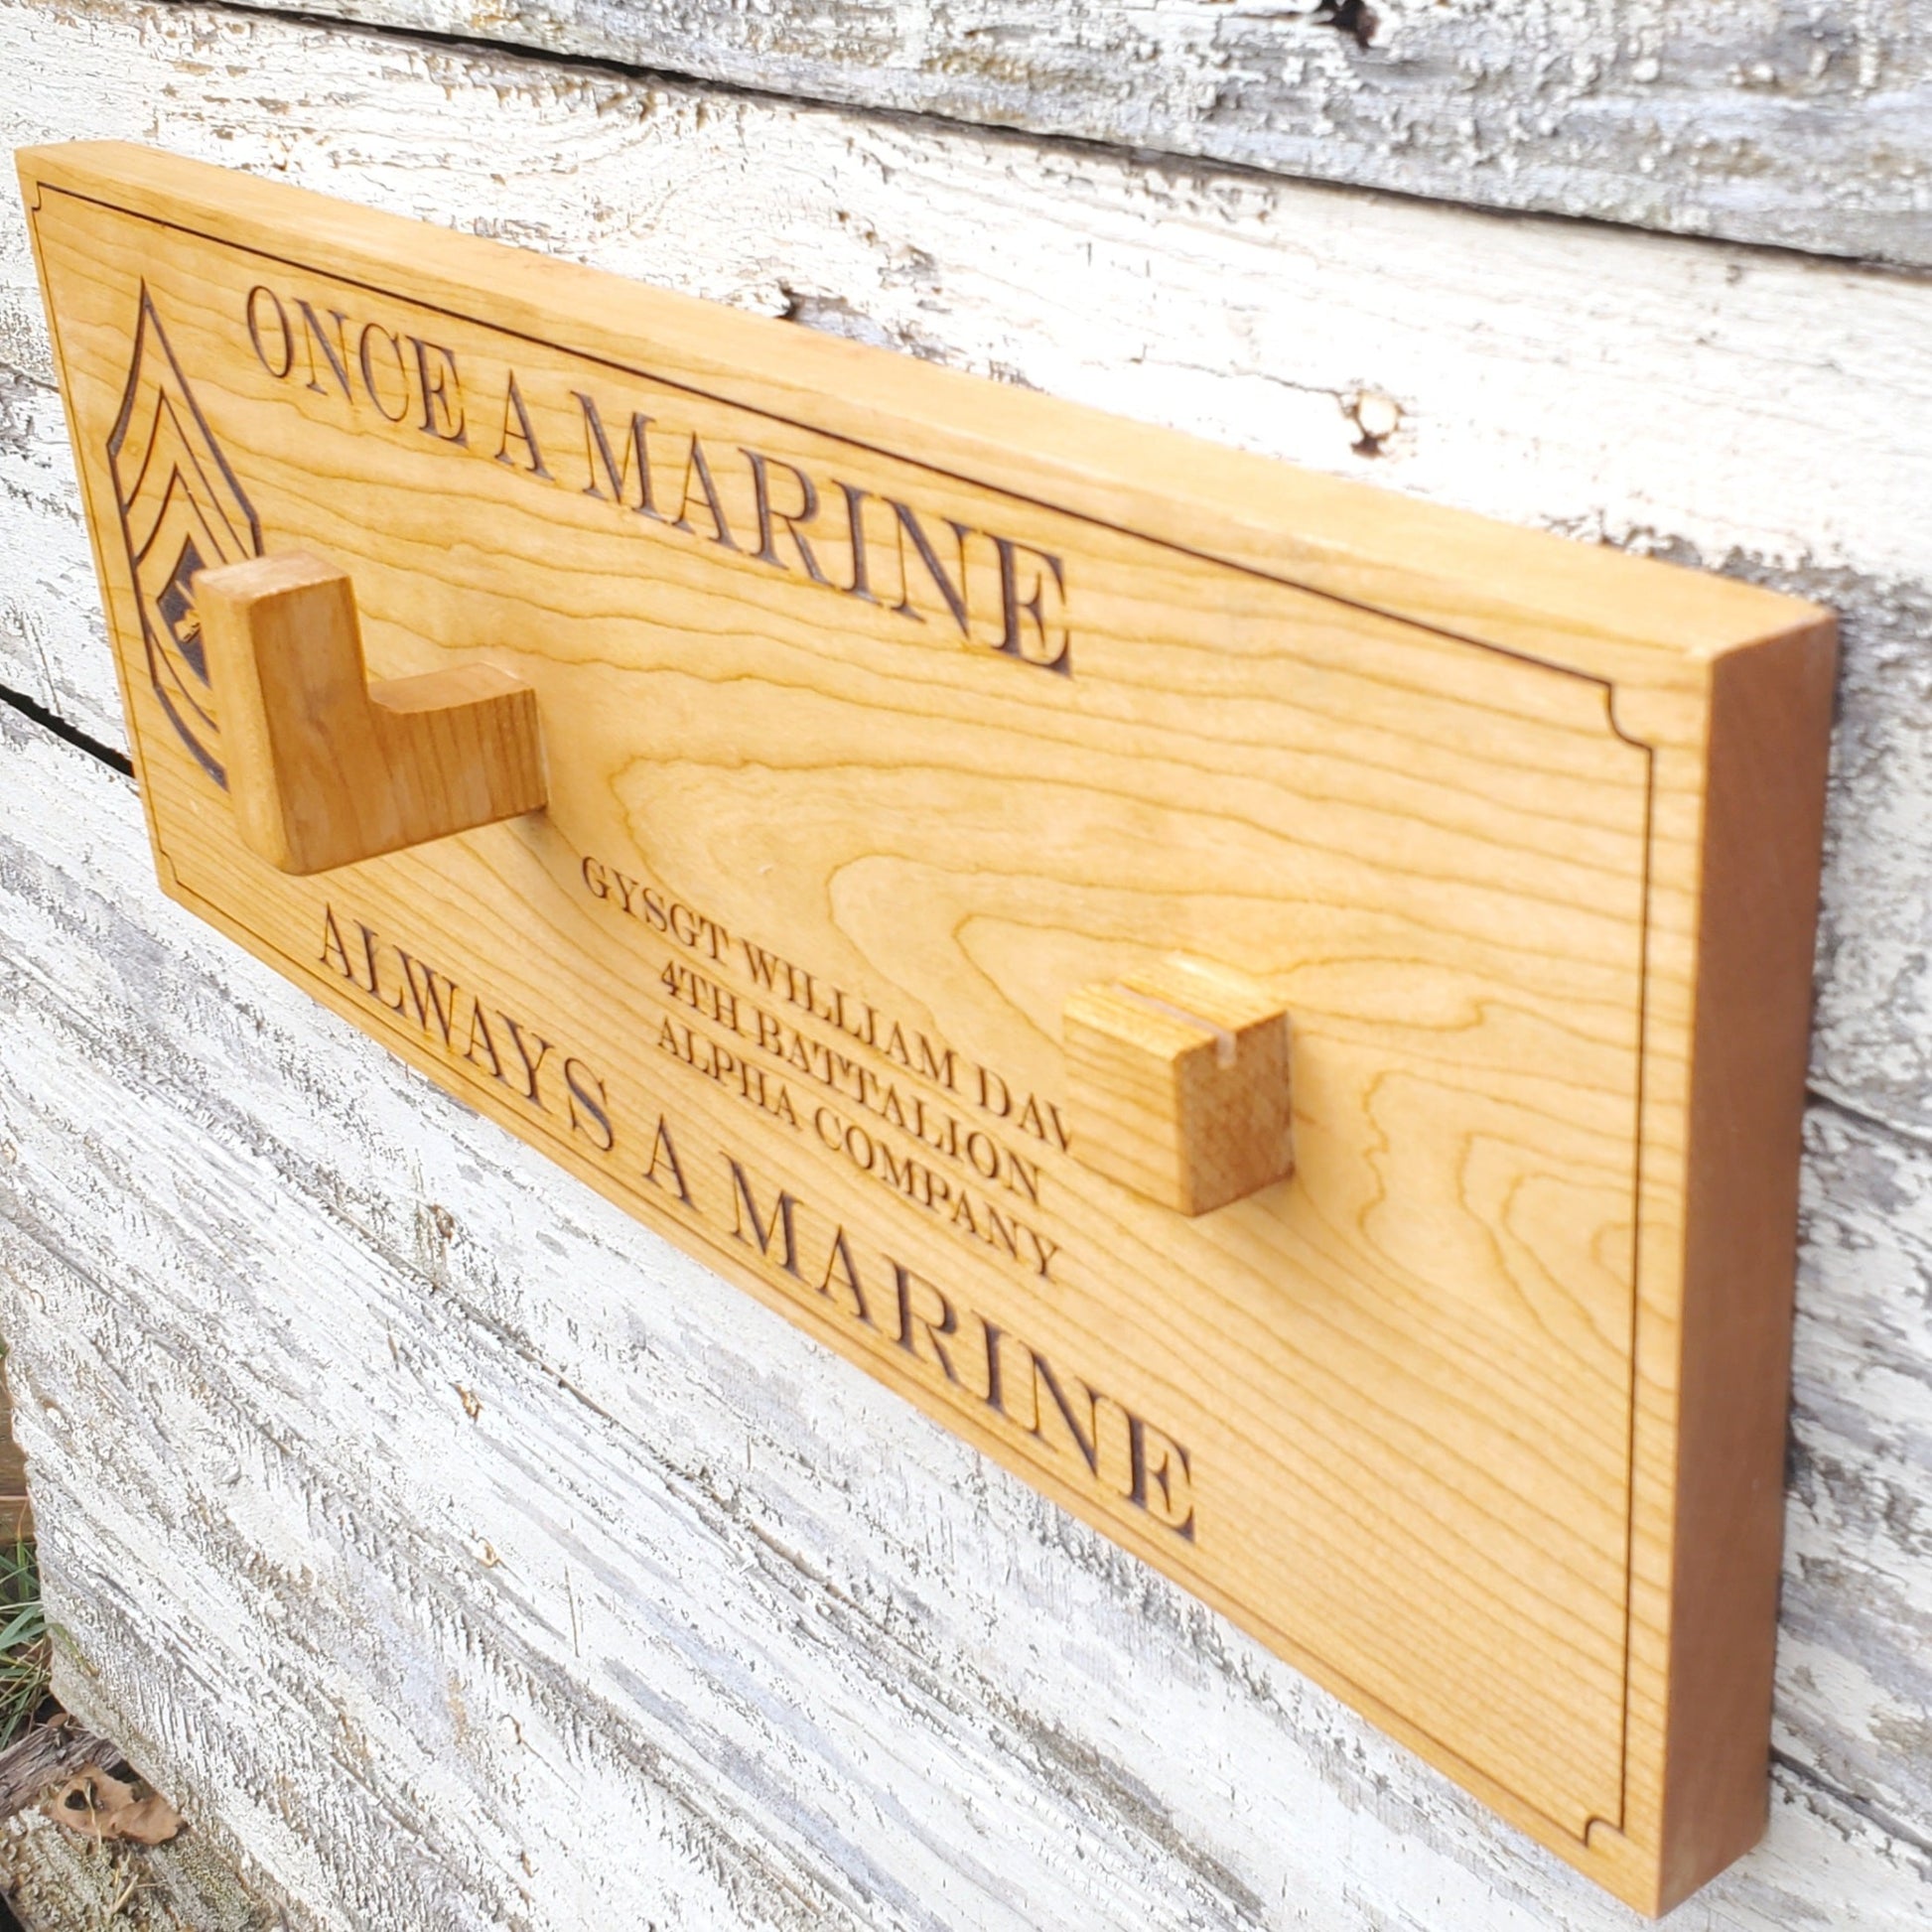 always a Marine wood plaque